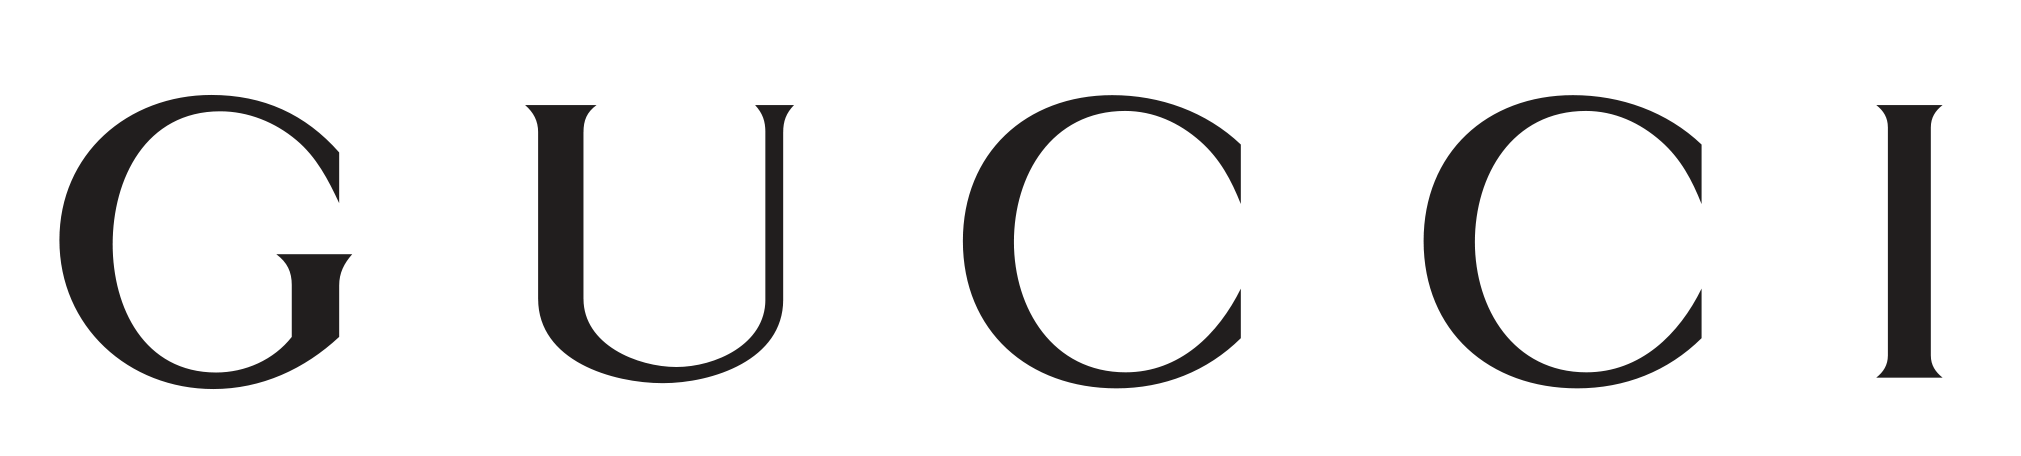 Gucci-Logo-wordmark.png